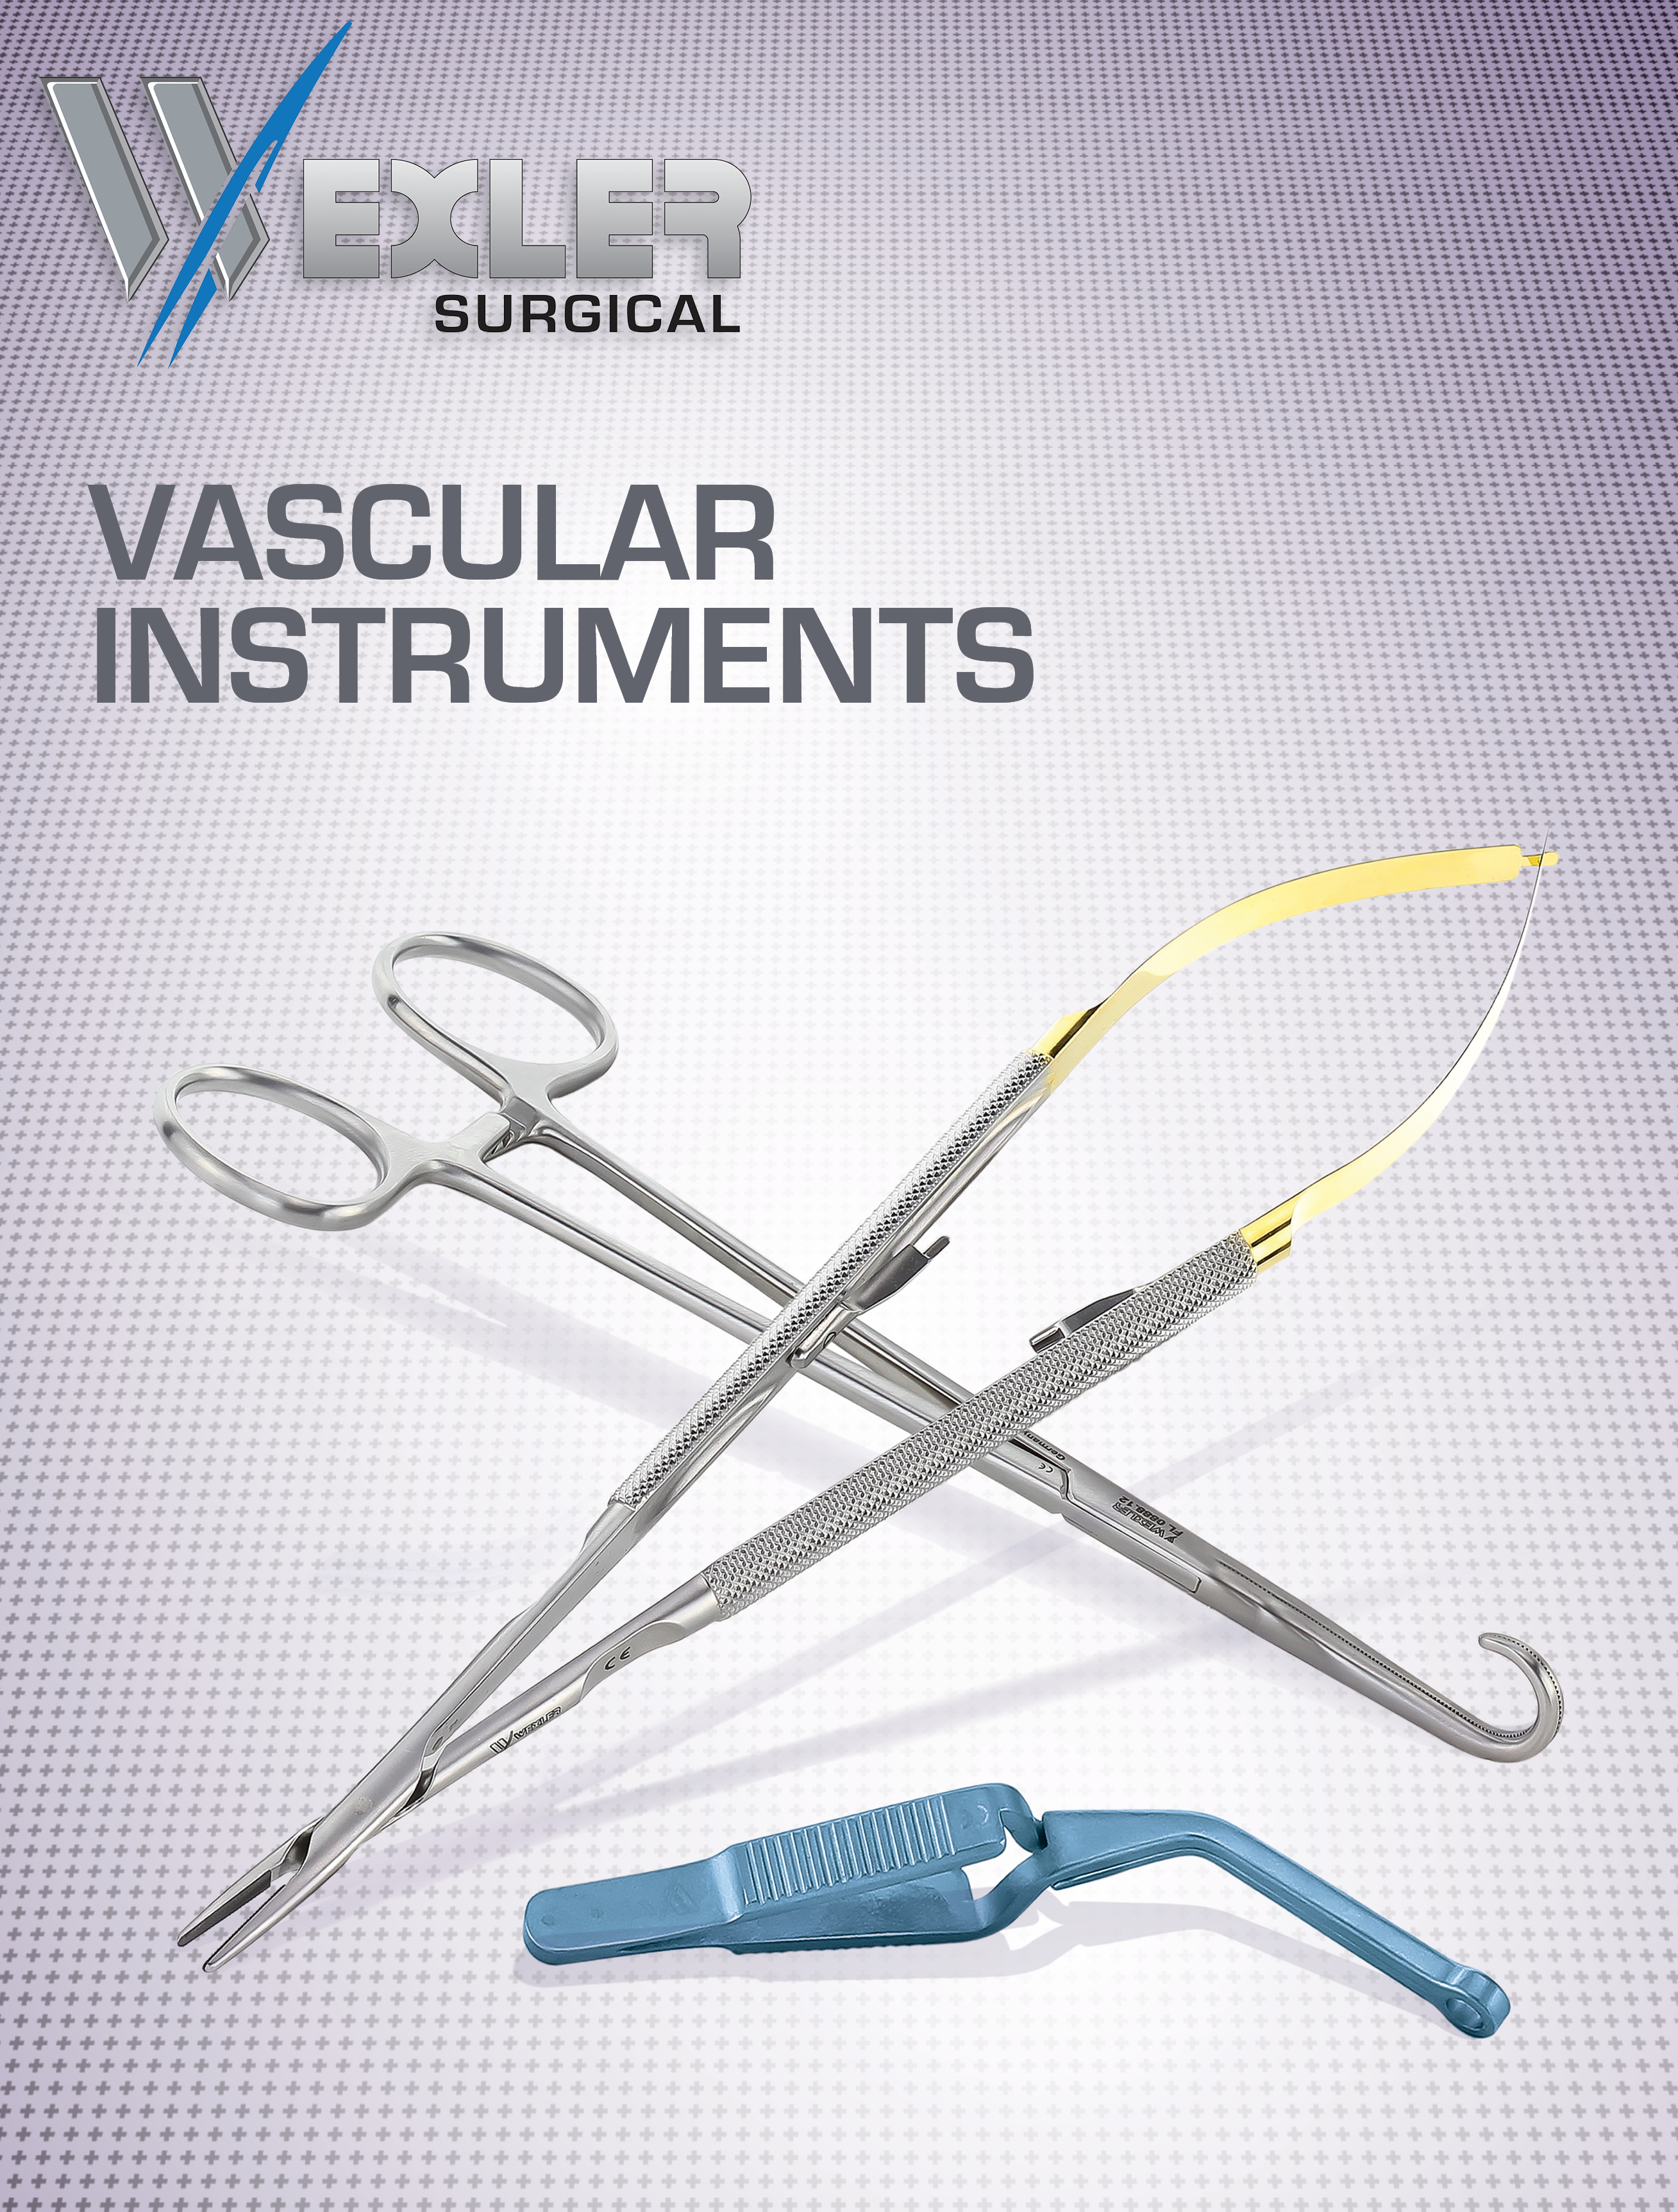 Vascular Instruments